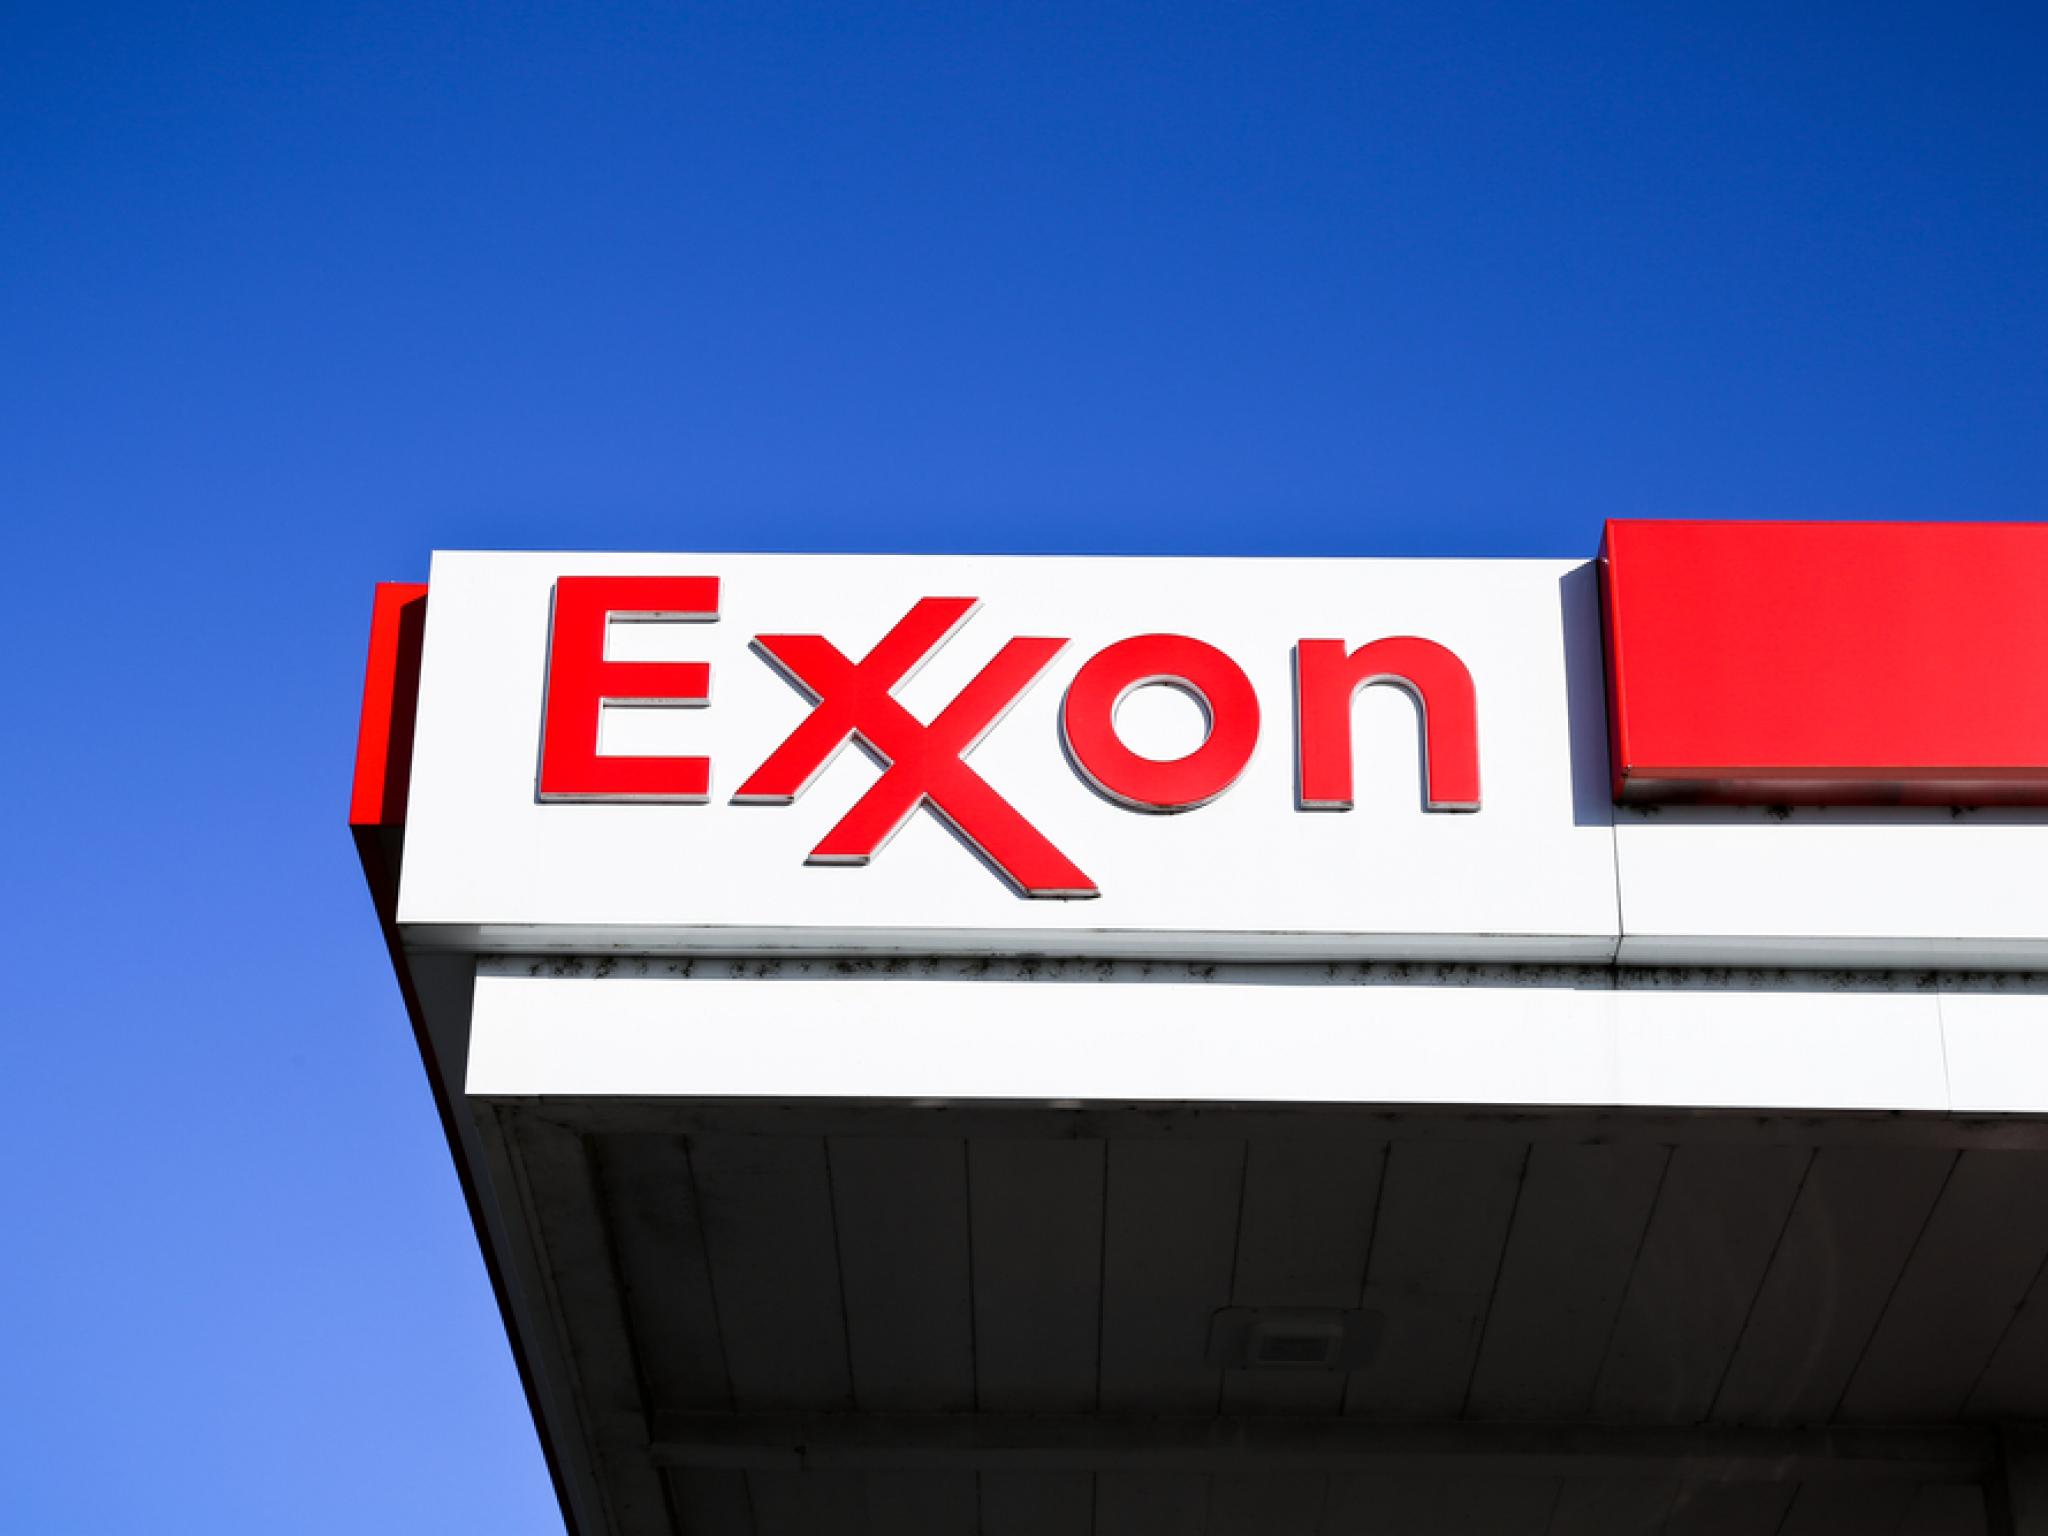  exxon-mobil-rakes-in-billions-from-guyana-oil-deal-net-margin-tops-chip-giant-report 